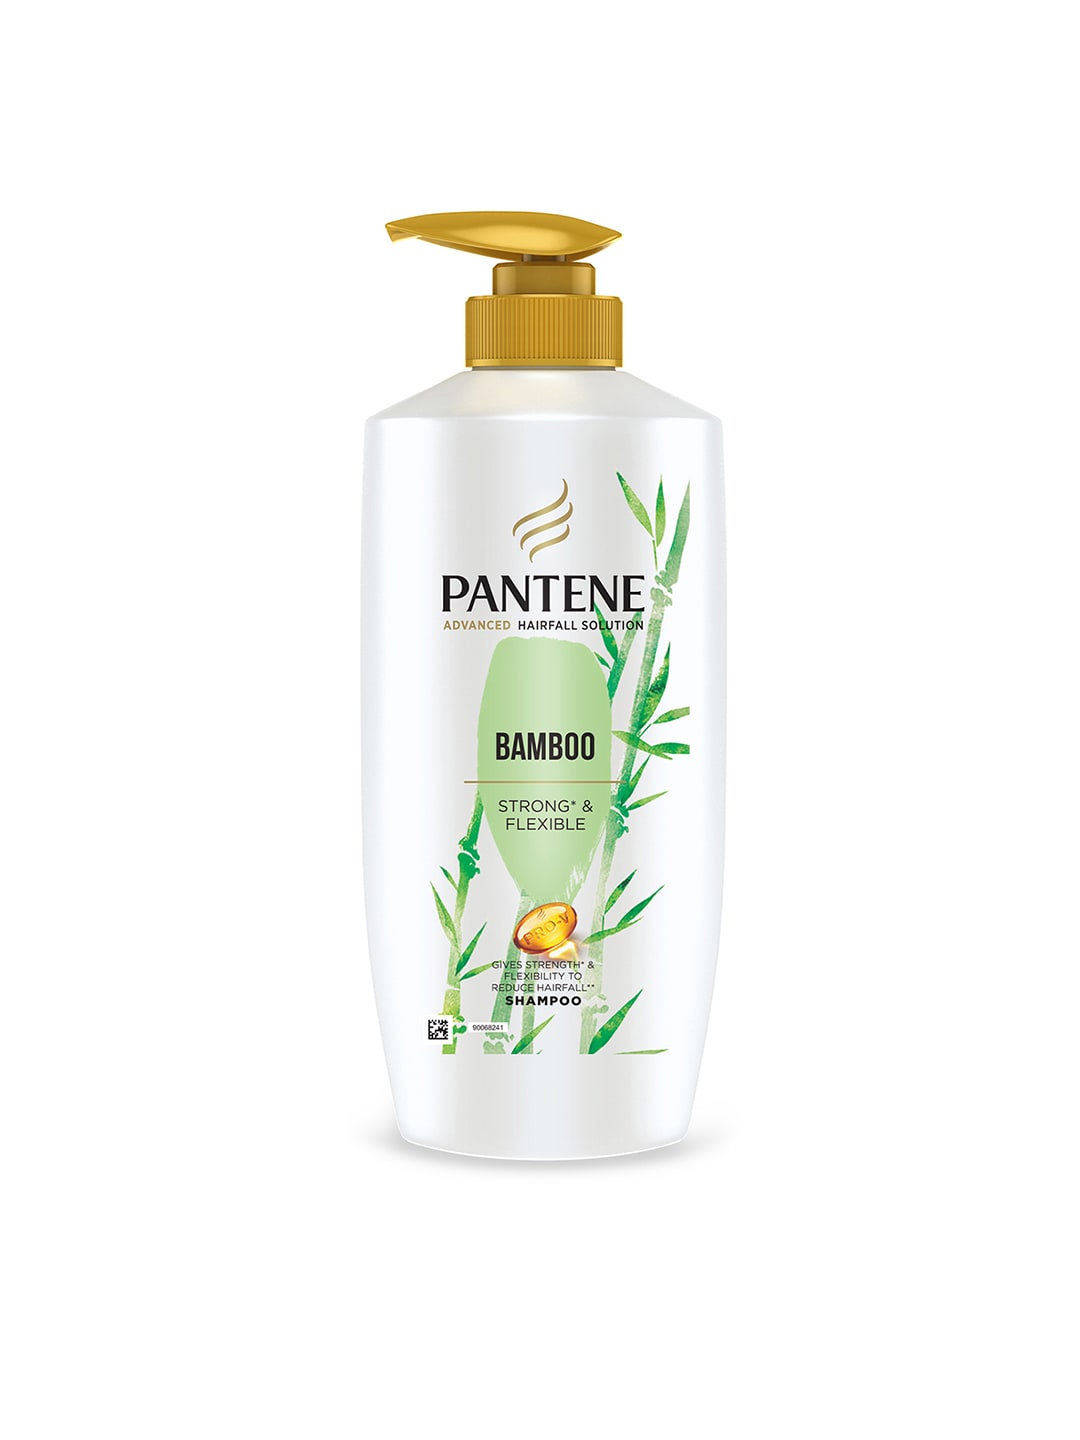 Pantene Advanced Hairfall Solution Bamboo Strong & Flexible Shampoo - 650 ml Price in India